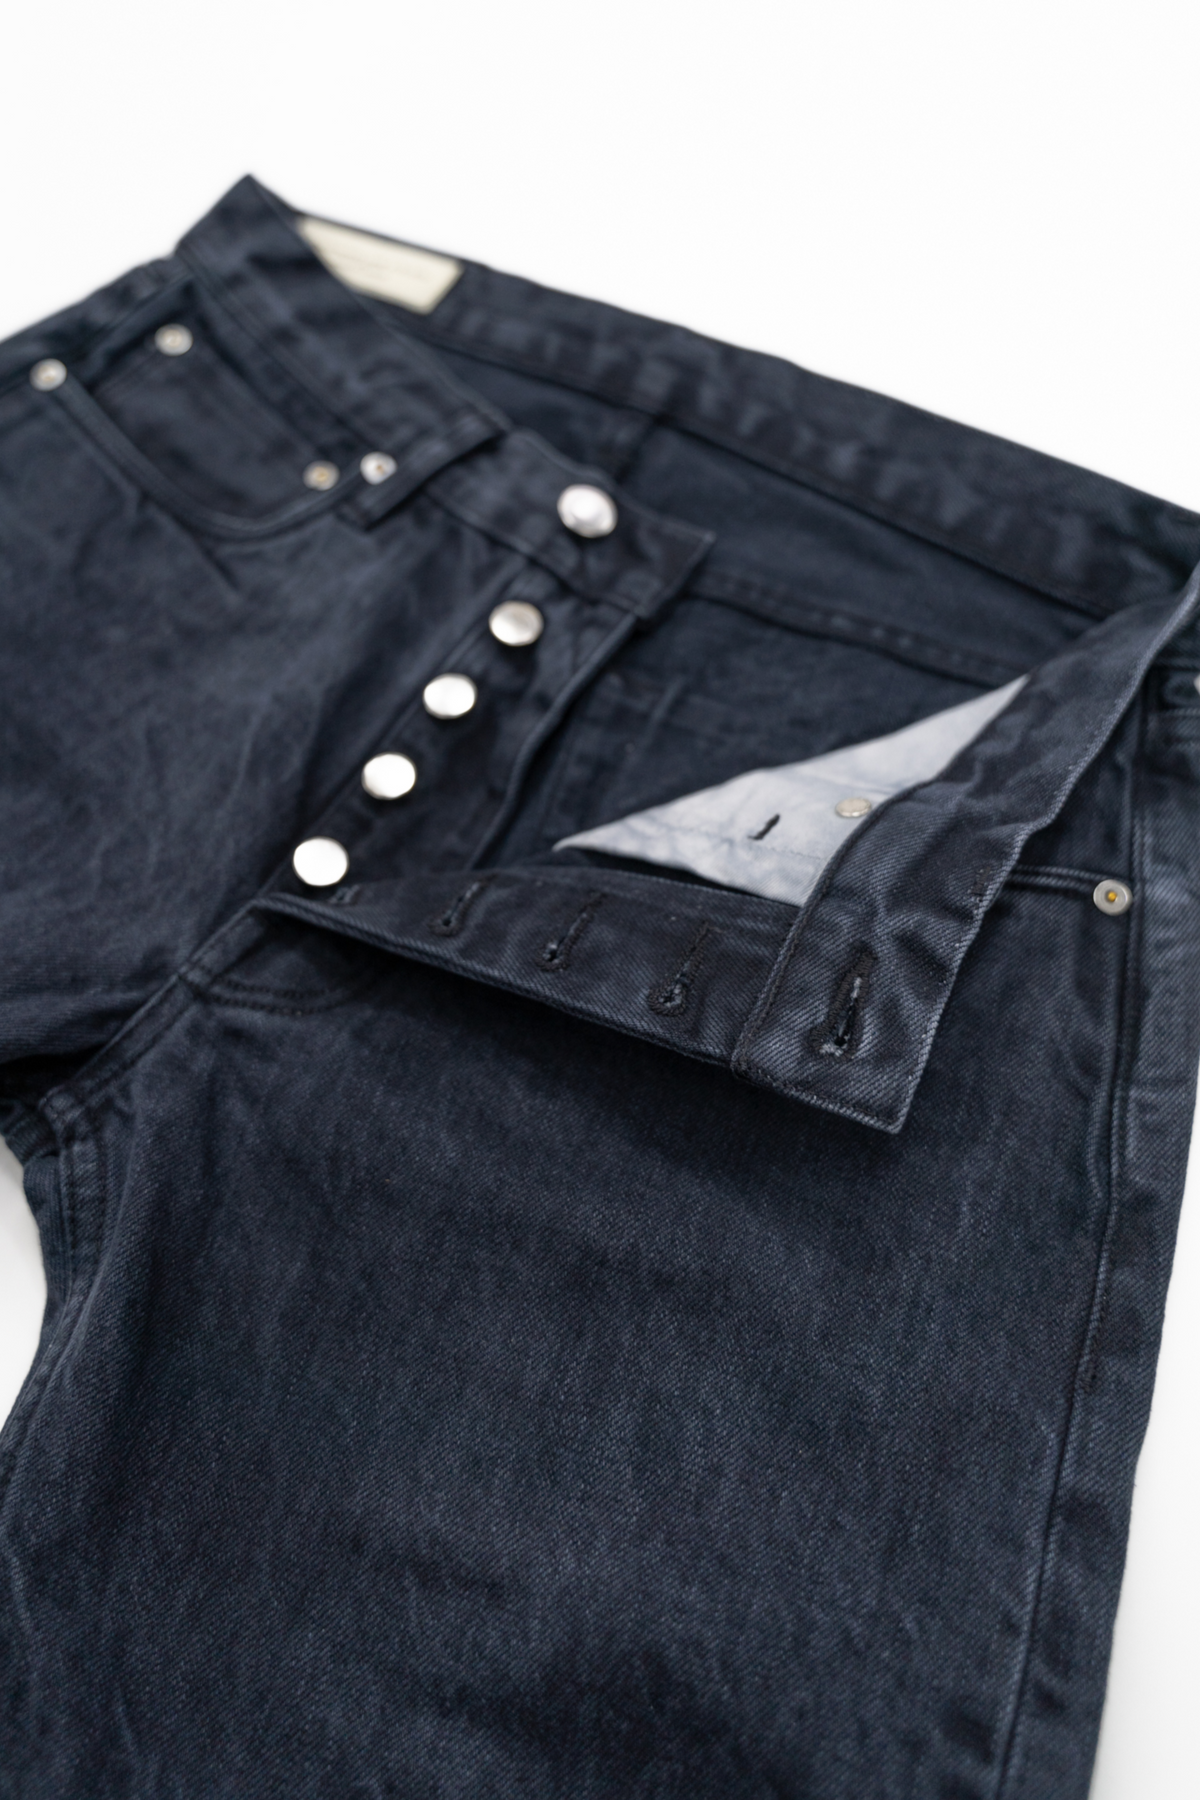 E8 Slim Tapered Washed Black 15oz Italian Selvedge Mens Jeans